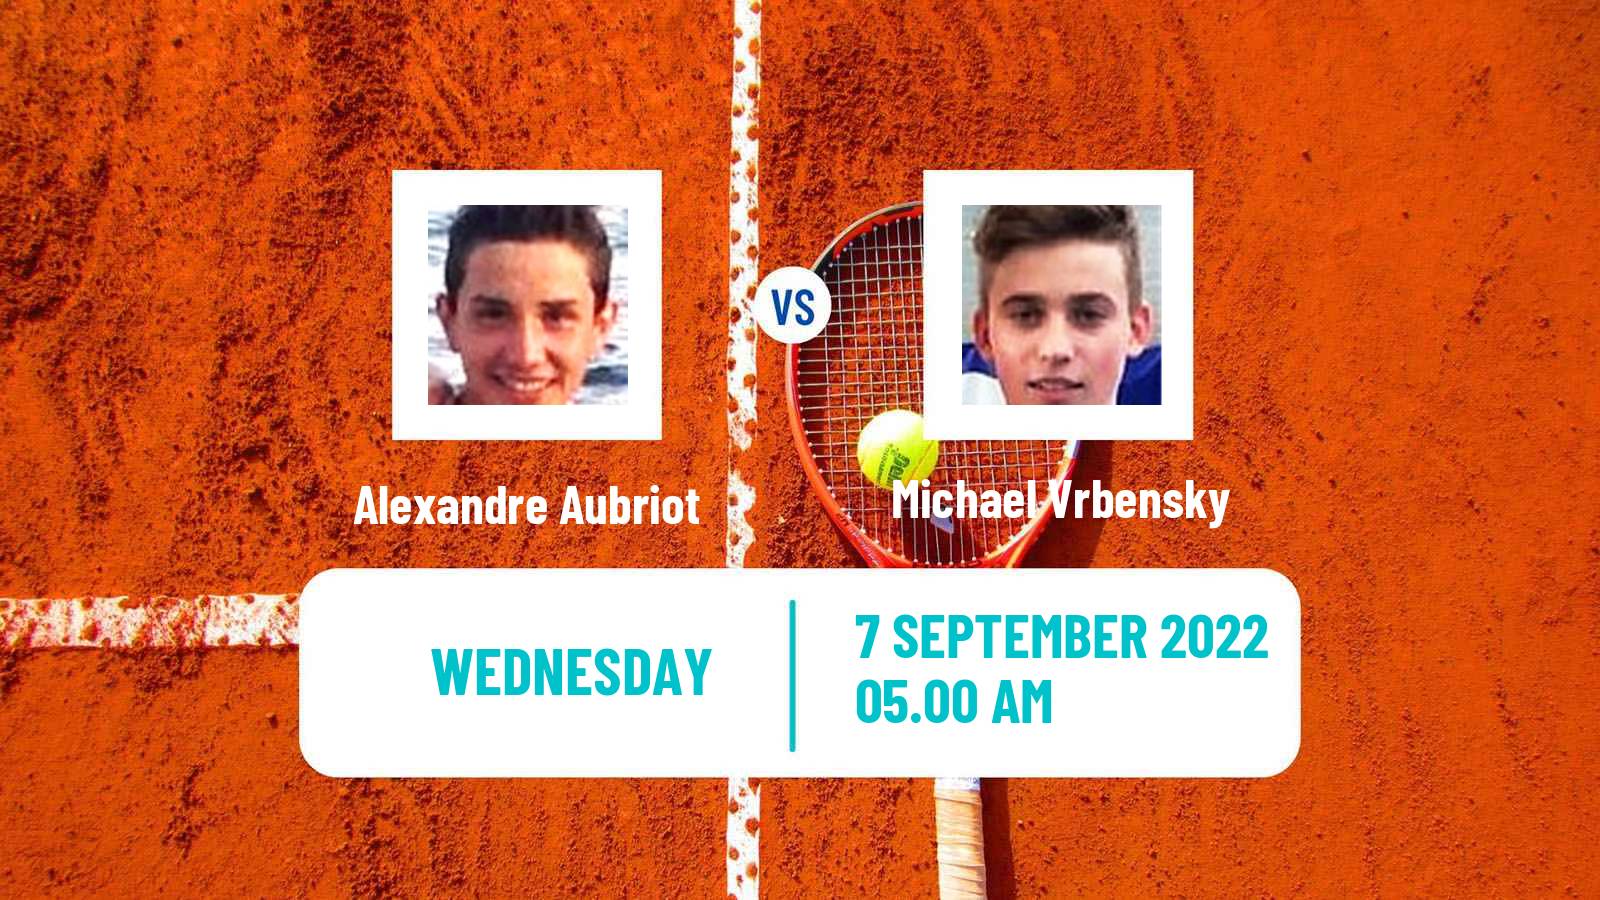 Tennis ITF Tournaments Alexandre Aubriot - Michael Vrbensky